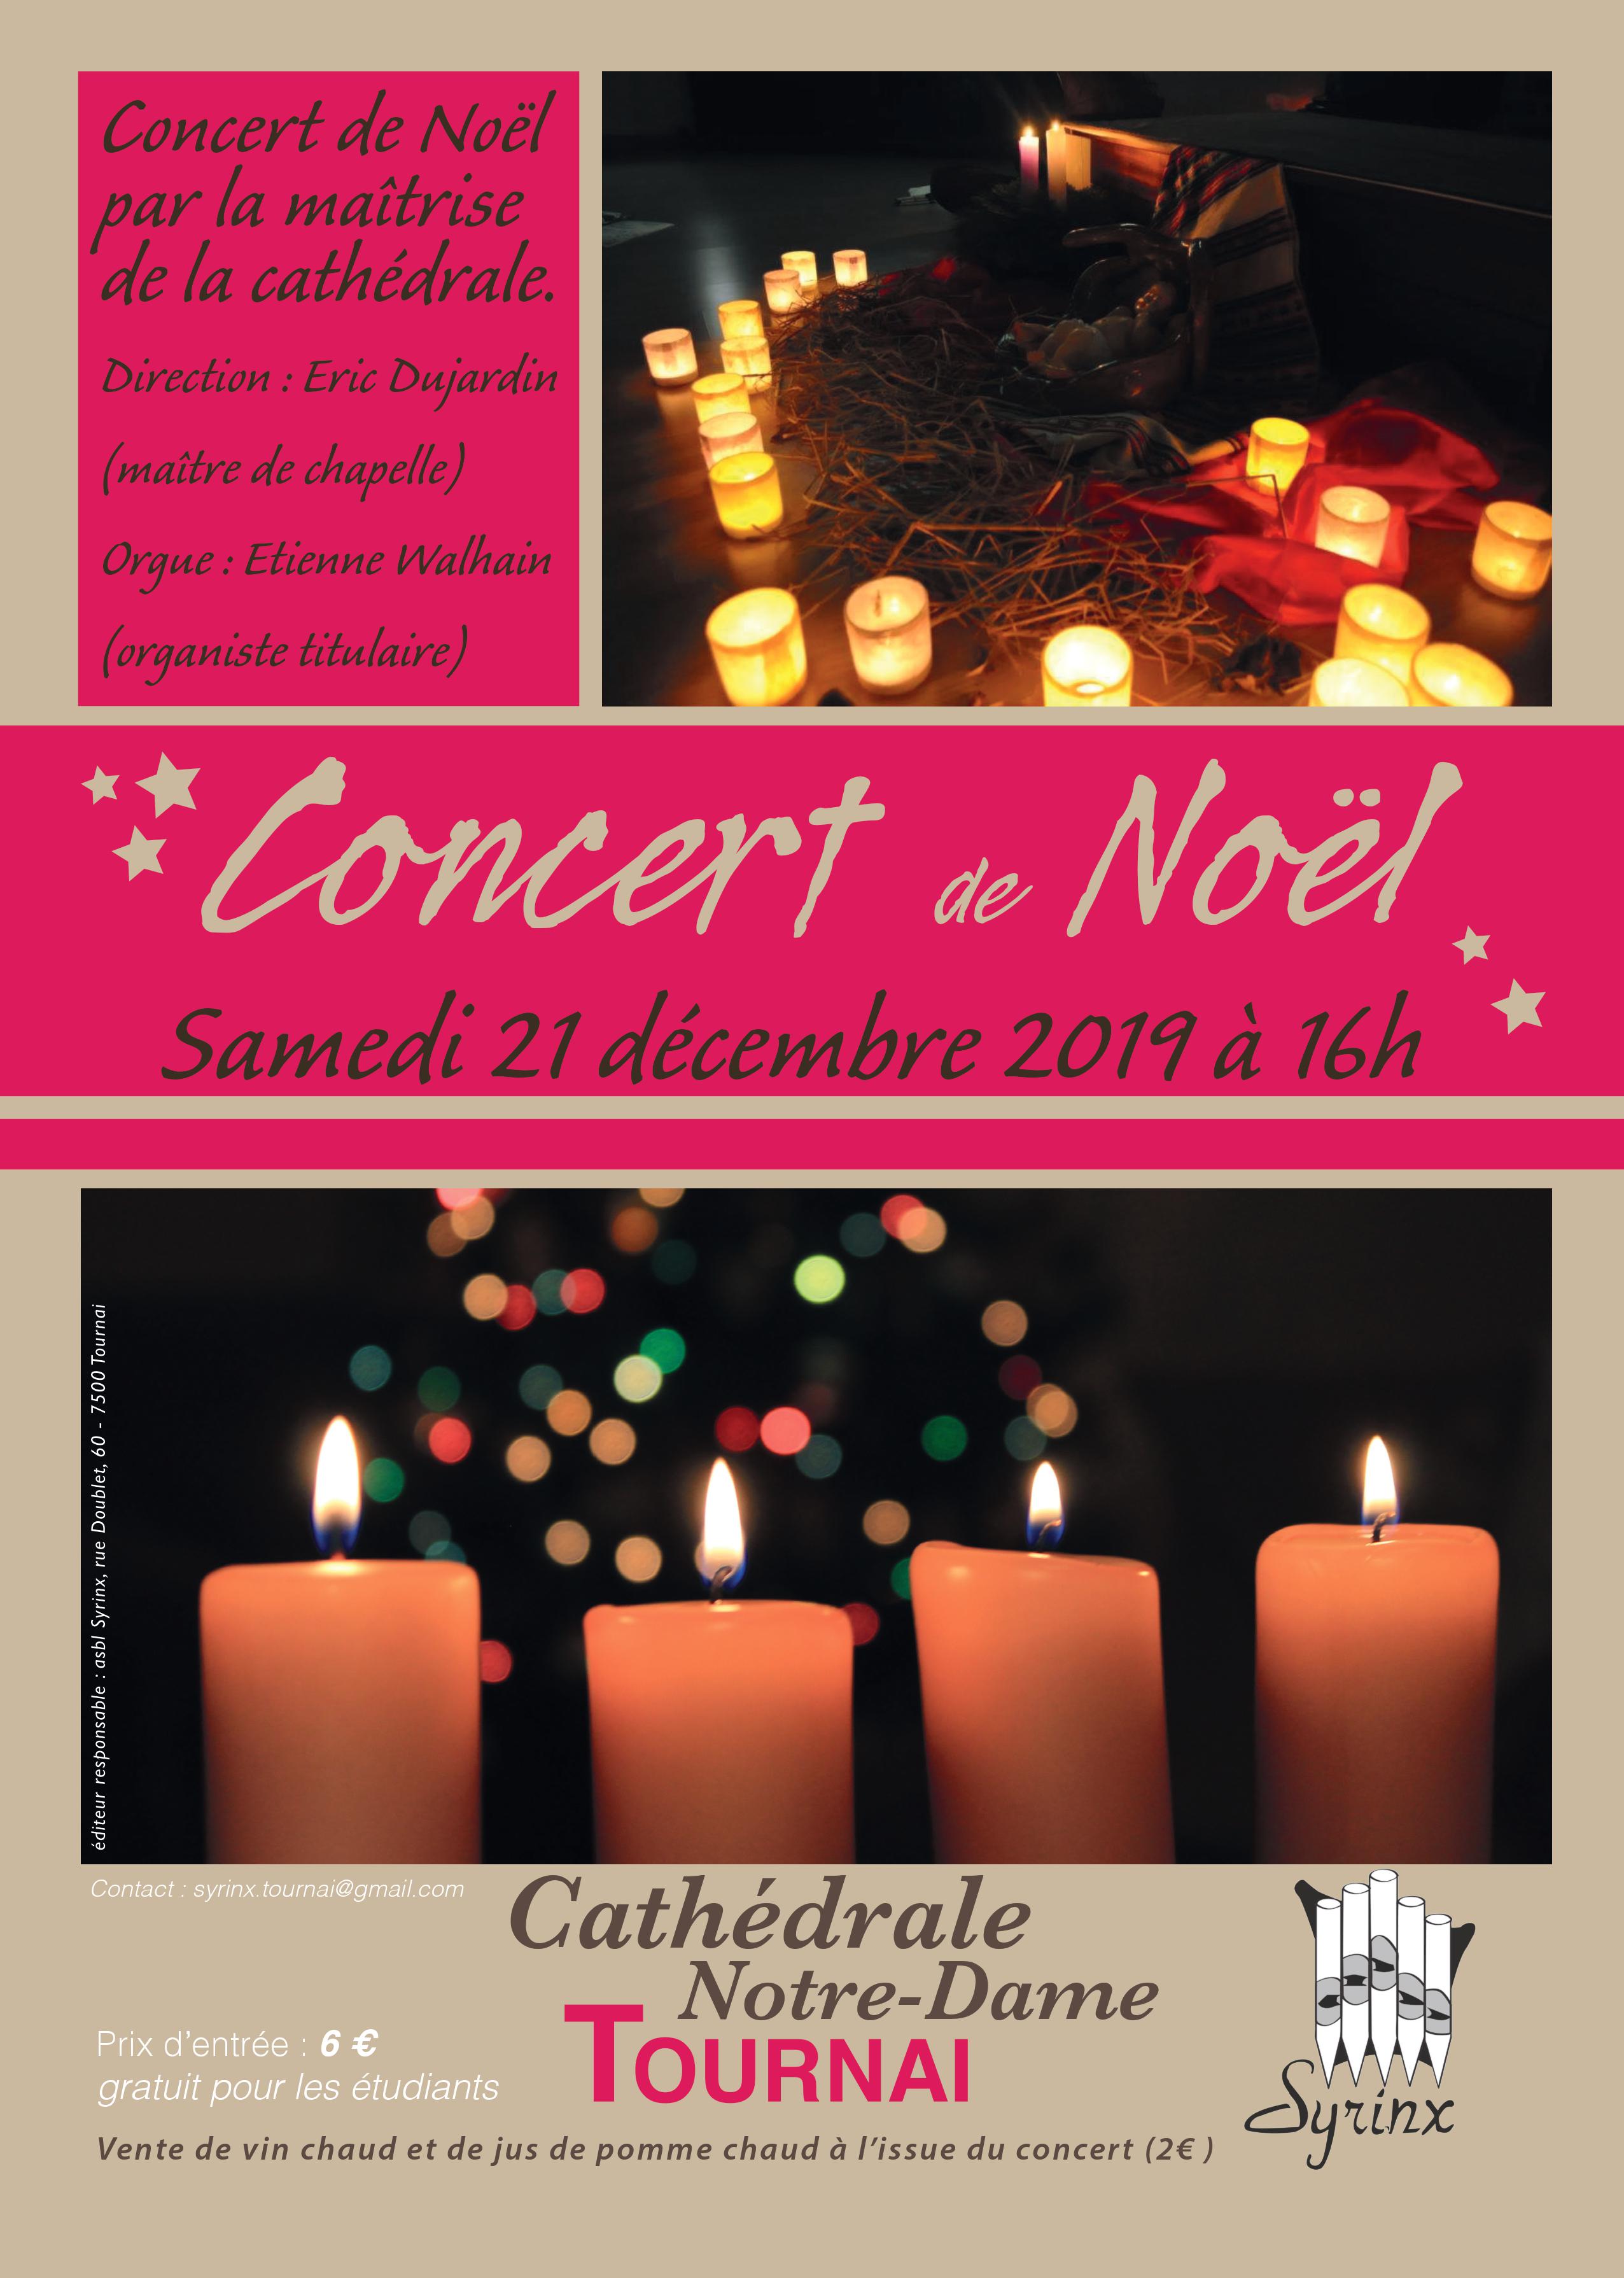 Concert Noel cathedrale 2019